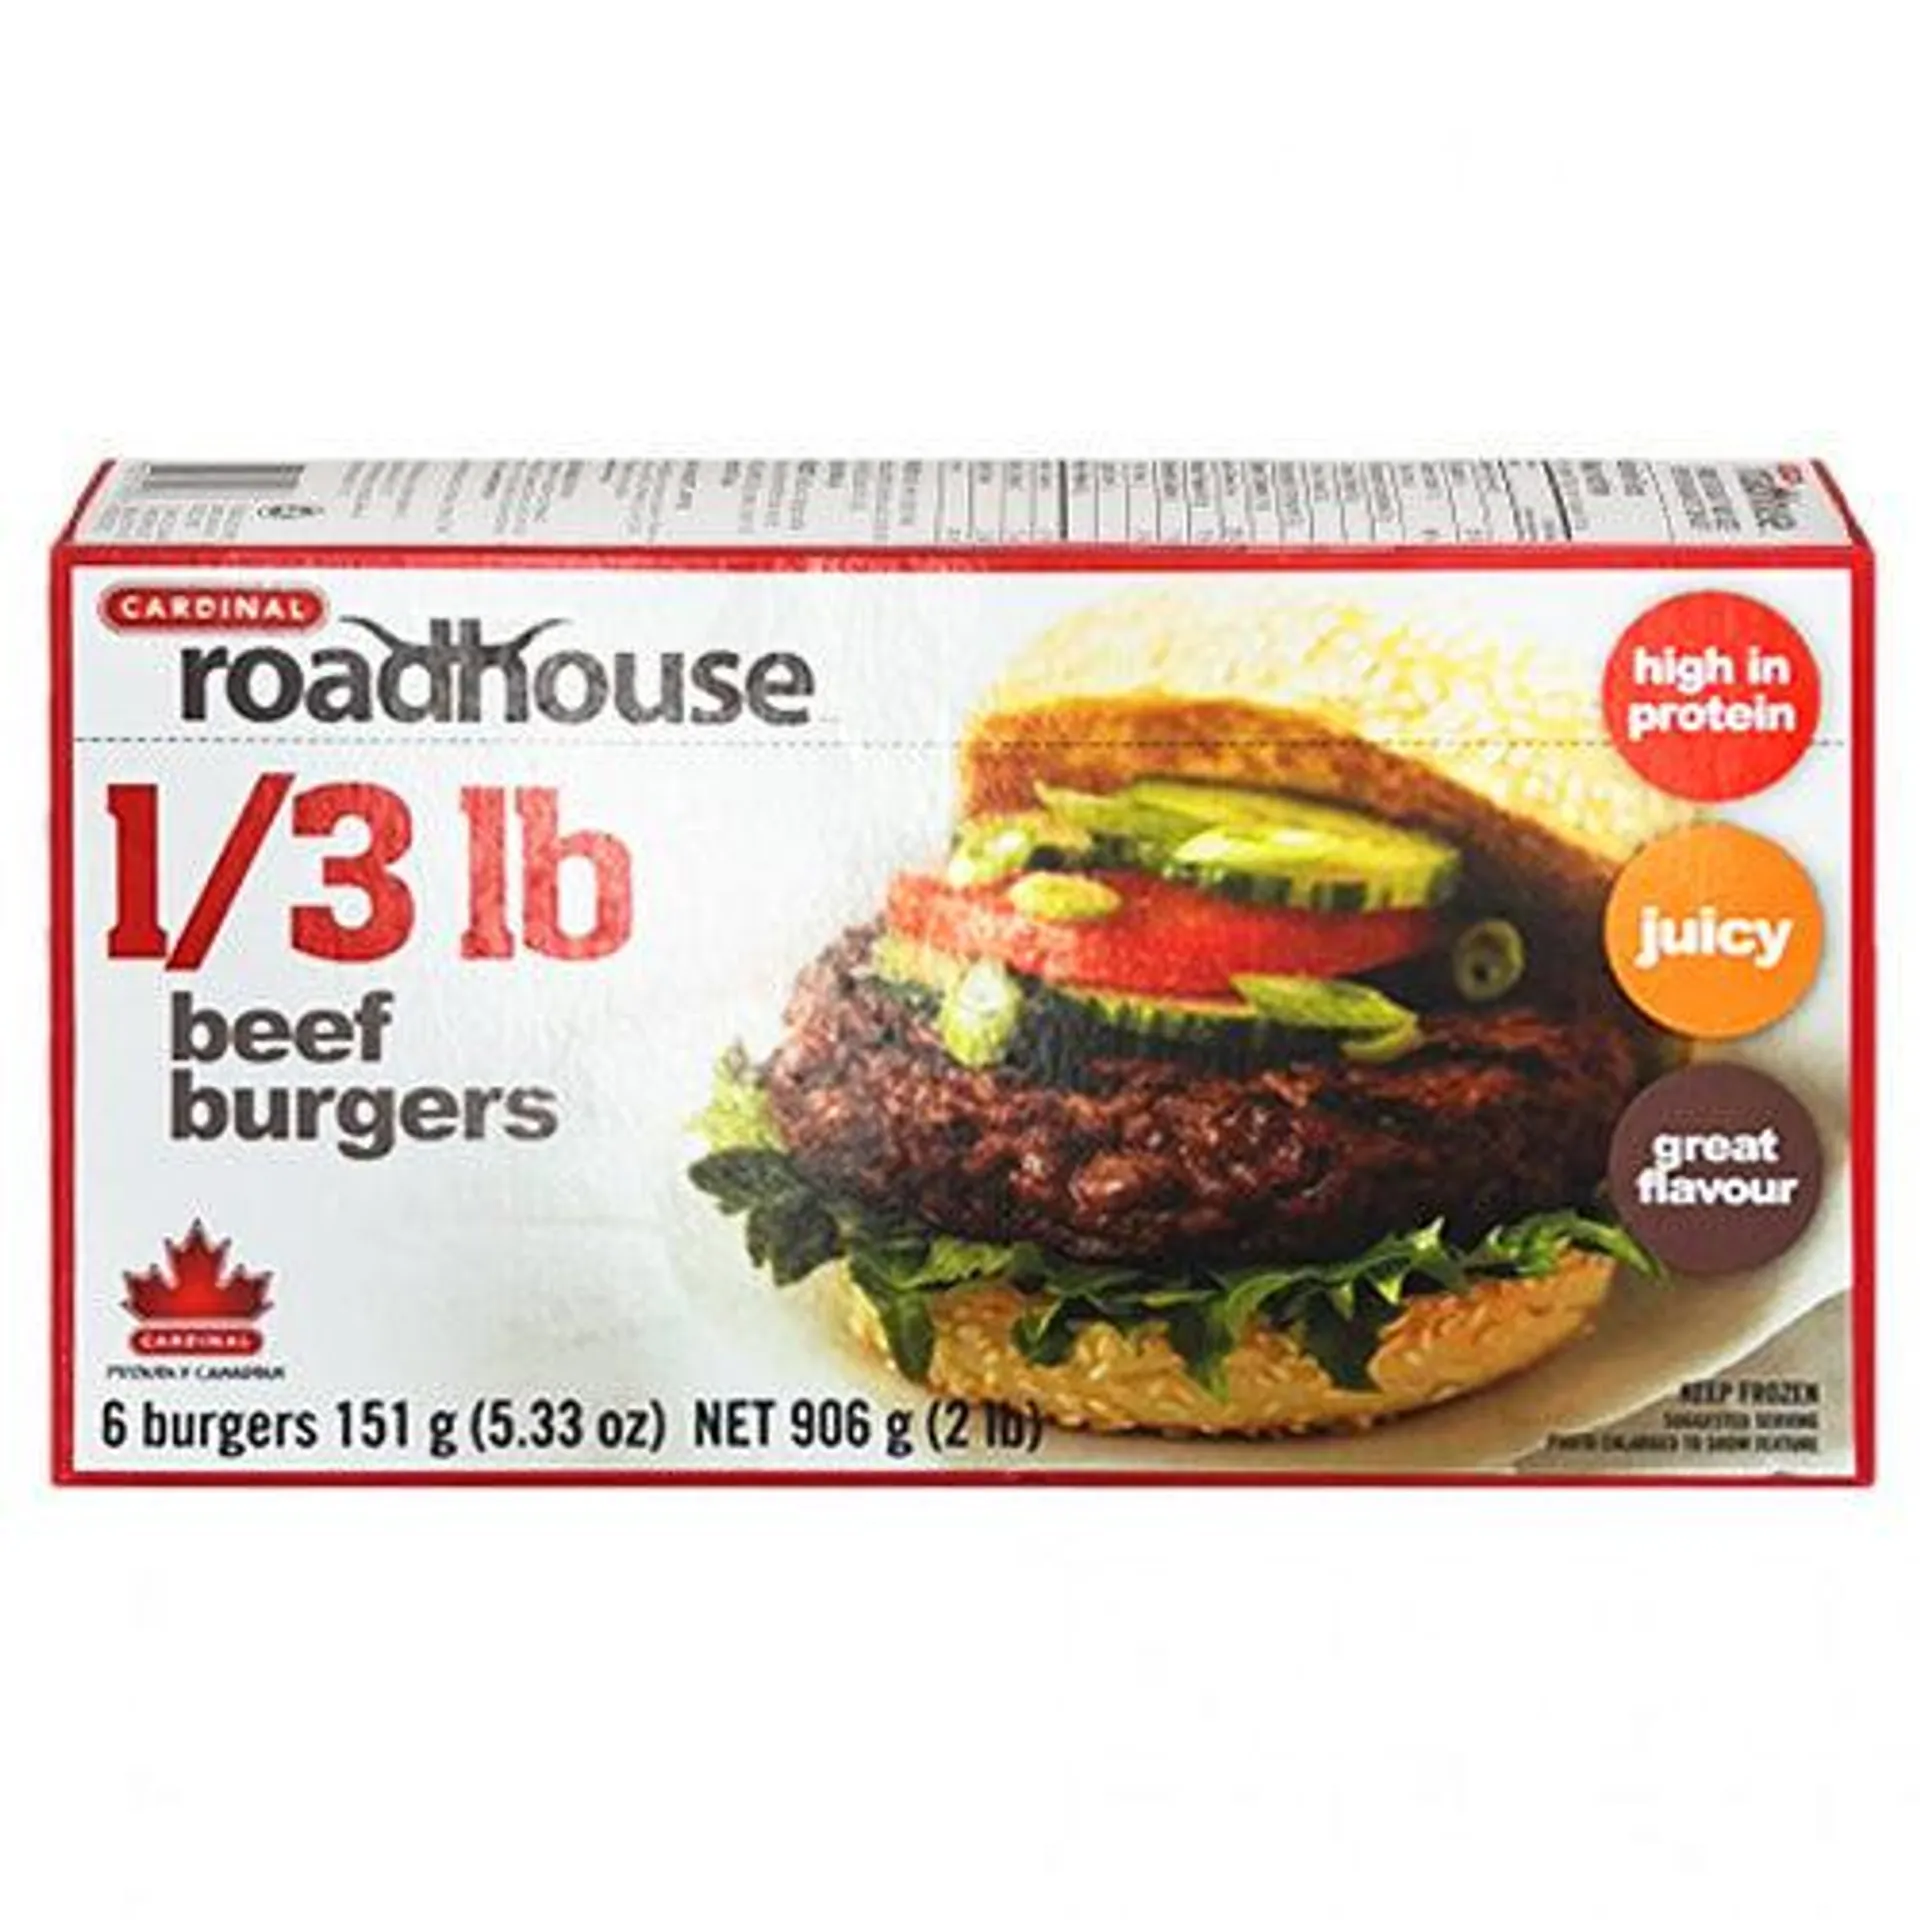 Cardinal Roadhouse 1/3 Pound Beef Burgers 6 burgers